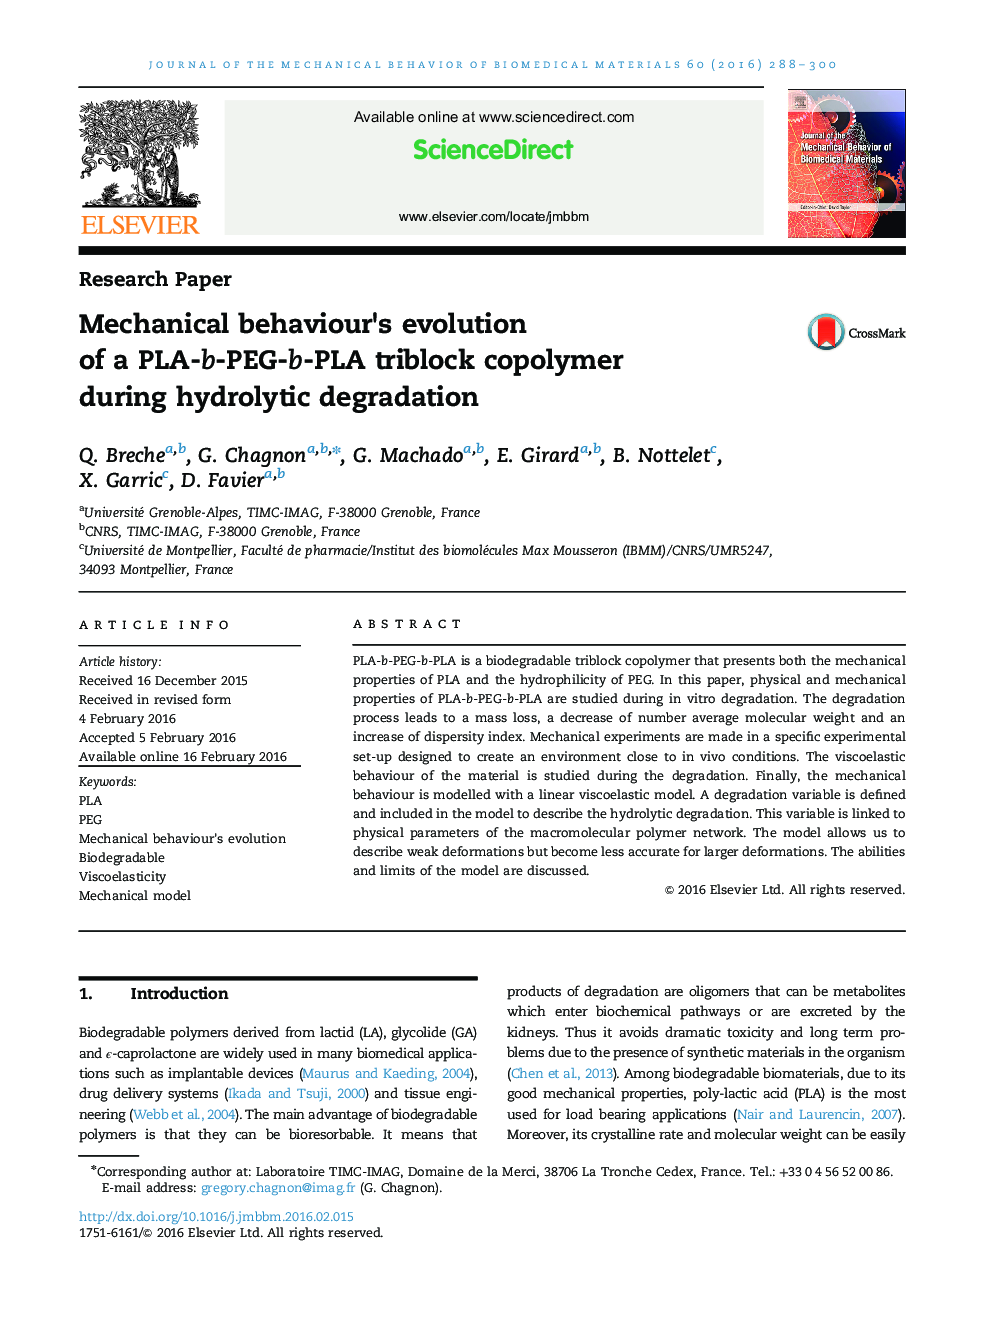 Mechanical behaviour×³s evolution of a PLA-b-PEG-b-PLA triblock copolymer during hydrolytic degradation